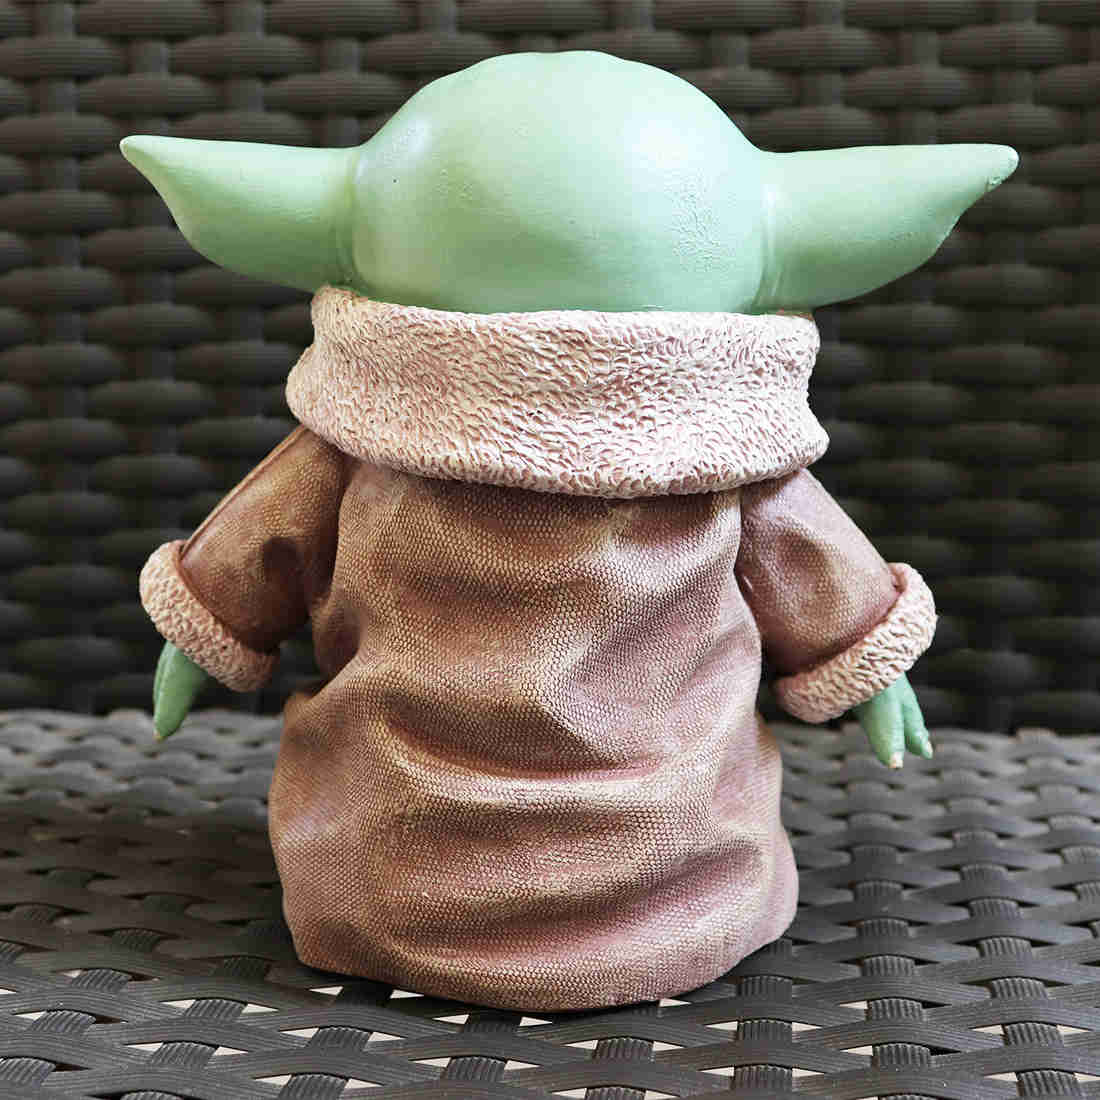 Star Wars Funko Pop Yoda Baby Action Figure Toys